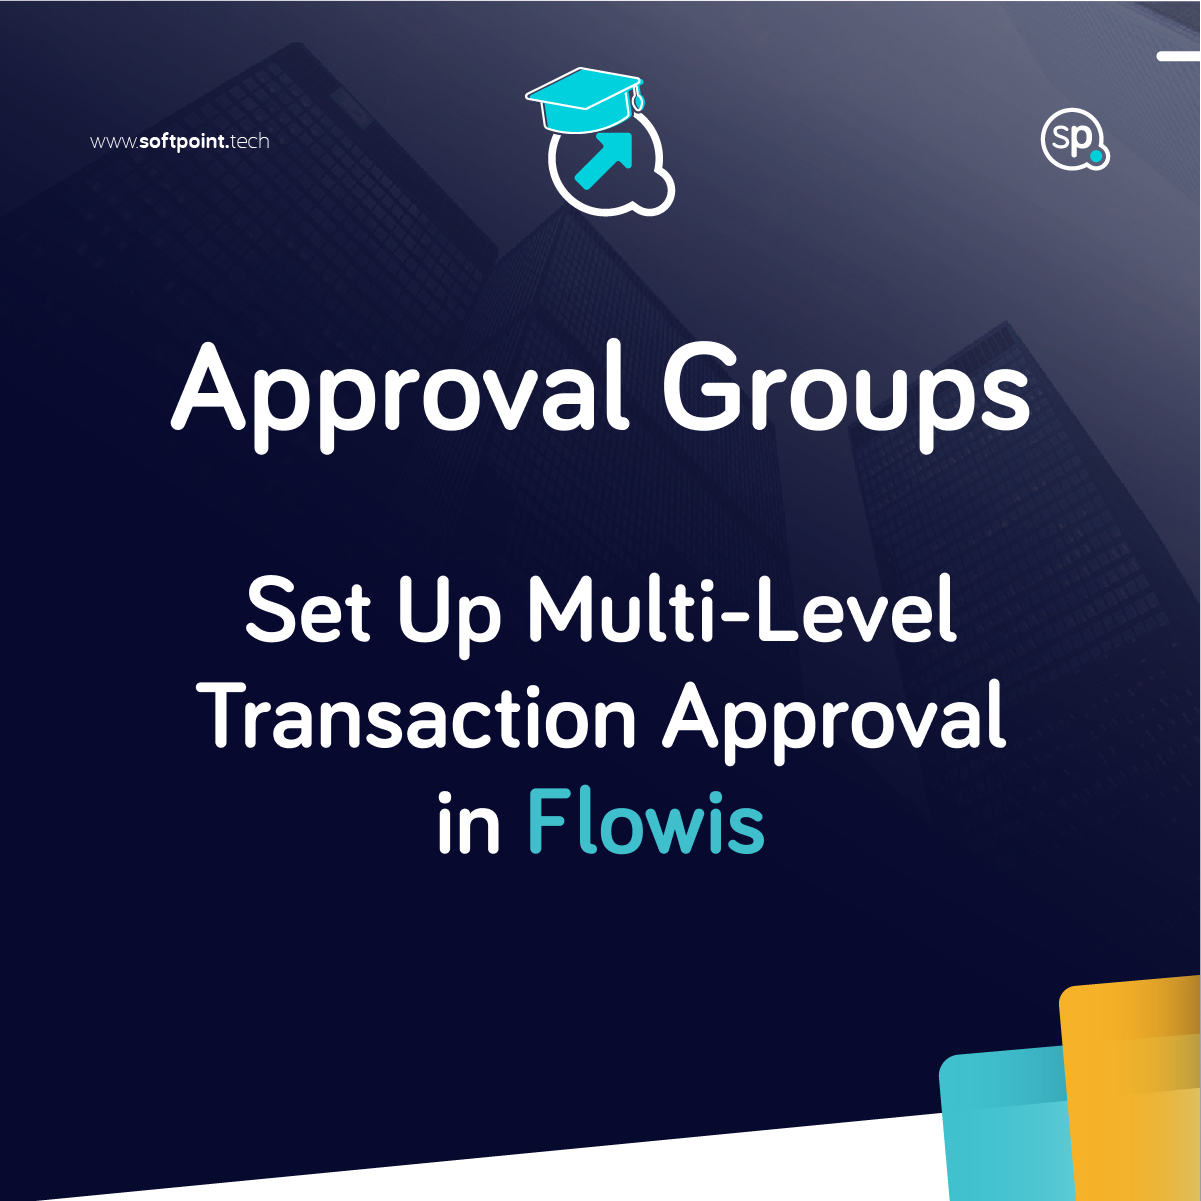 Approval Groups – Set Up Multi-Level Transaction Approval